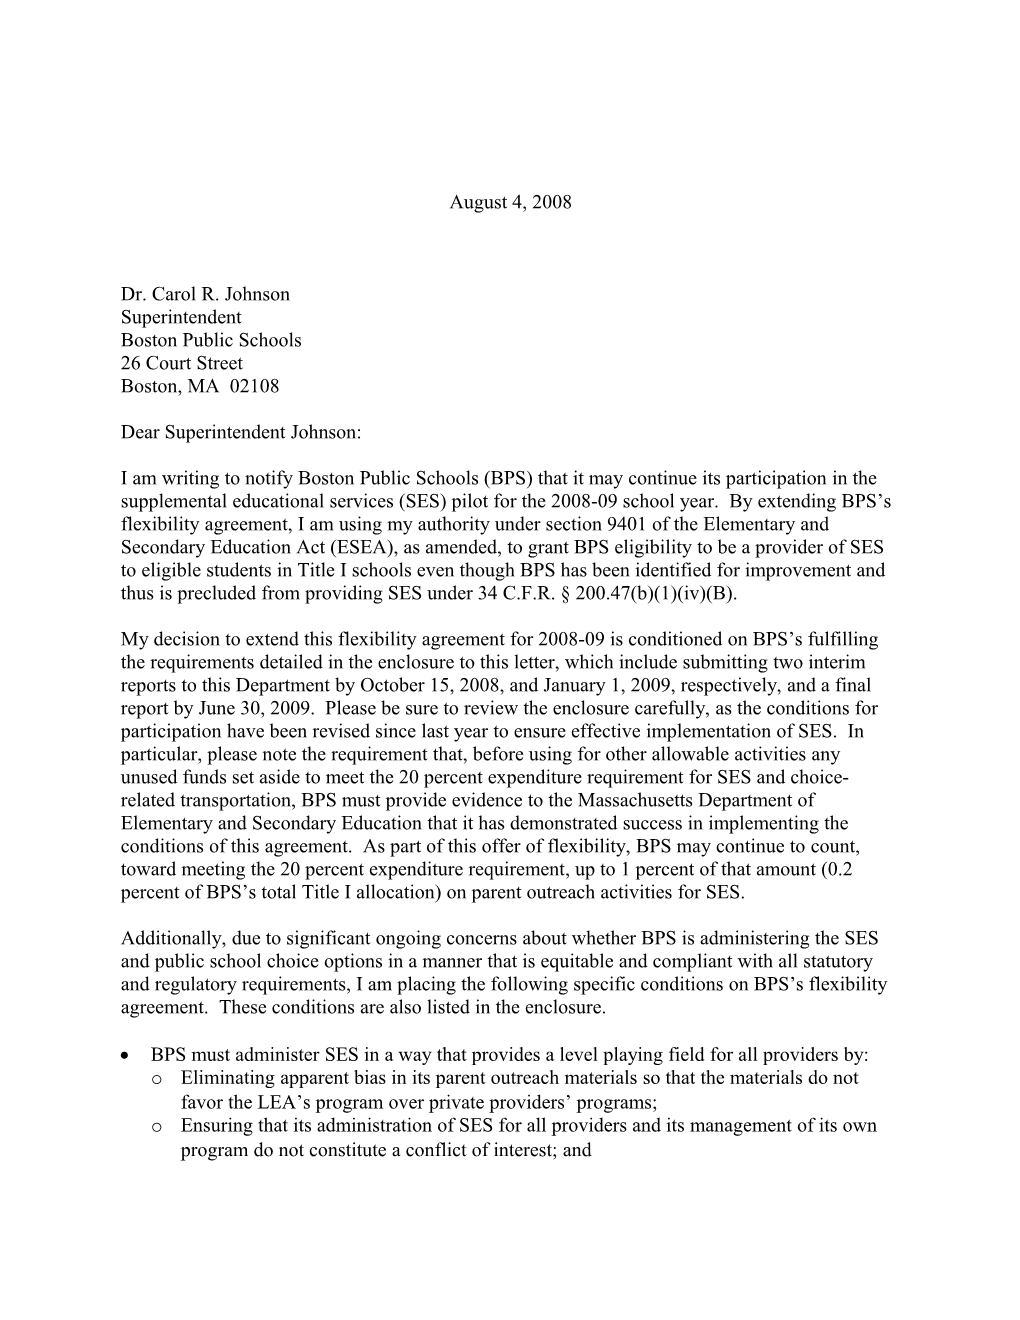 Letter Confirming Boston Public Schools to Continue Its Participation in Providing SES